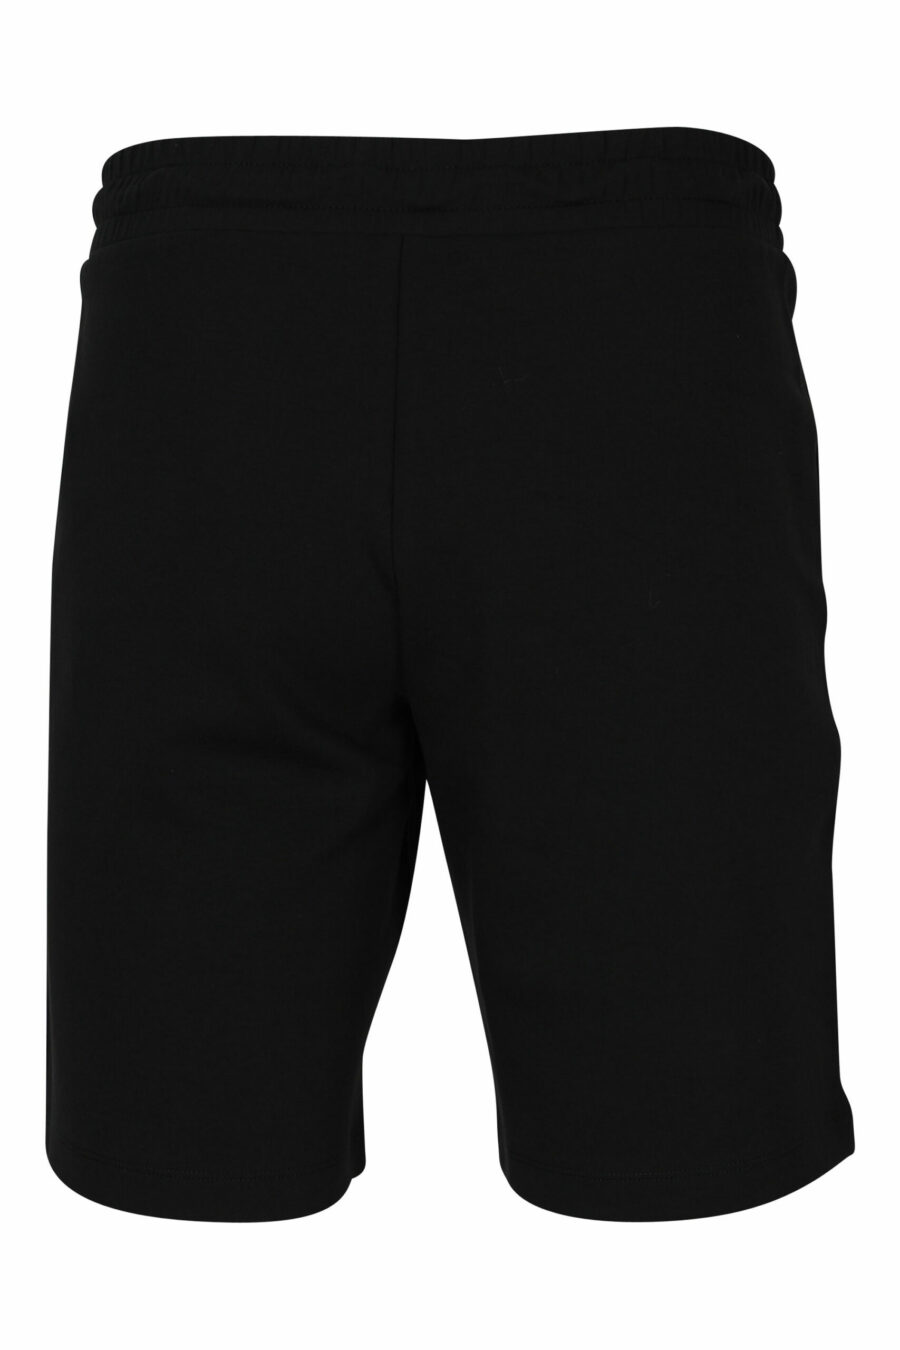 Pantalón de chándal negro corto con minilogo "lux identity" blanco en placa negro - 107532 scaled